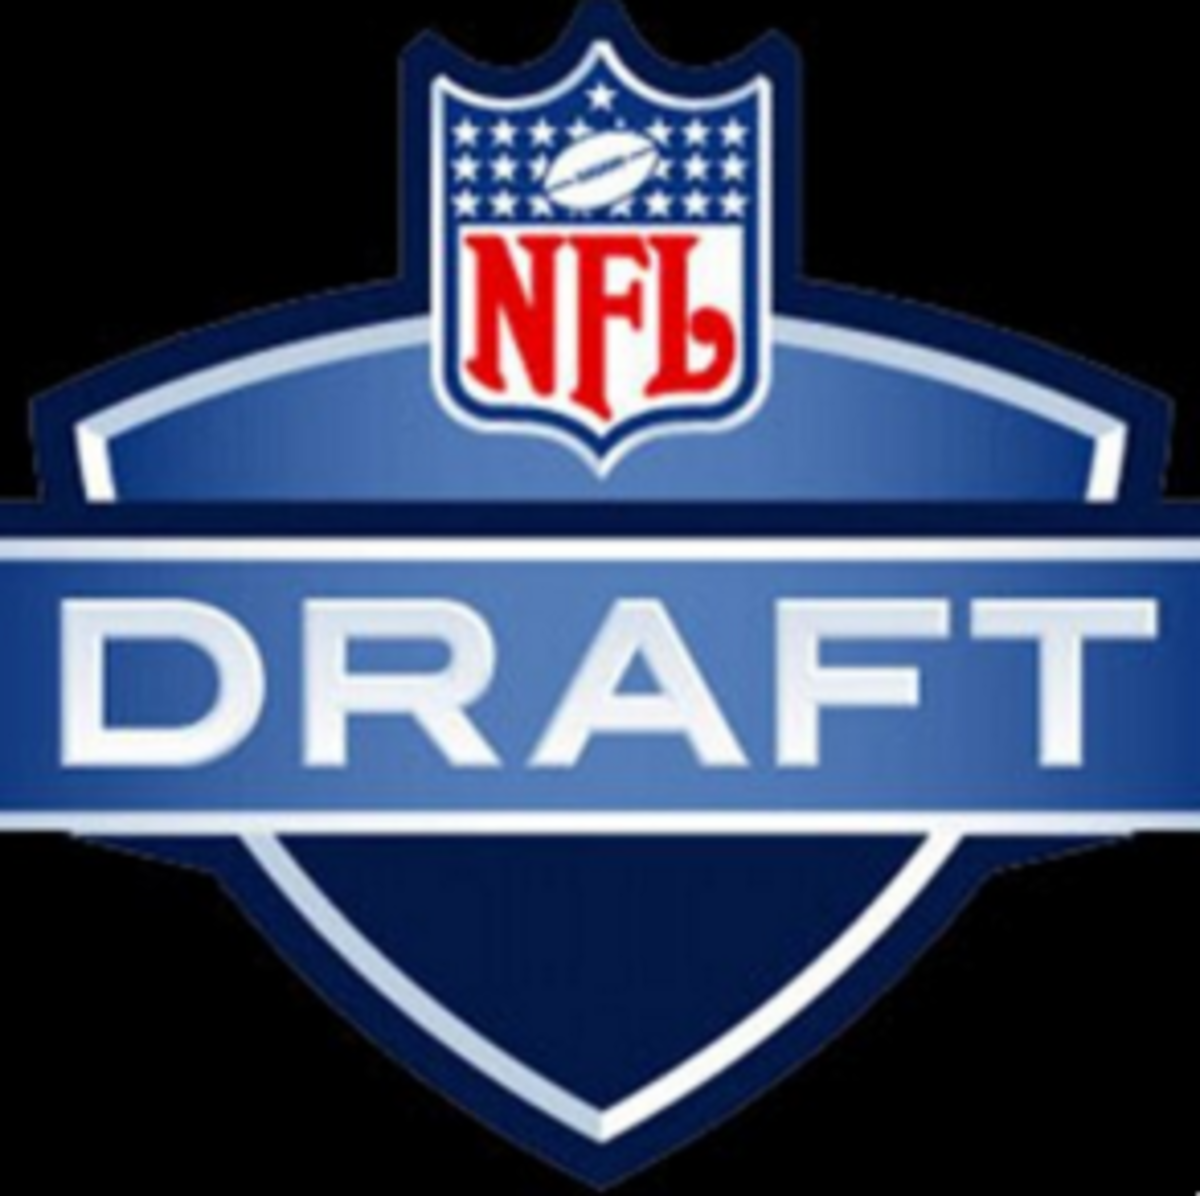 NFL draft logo.